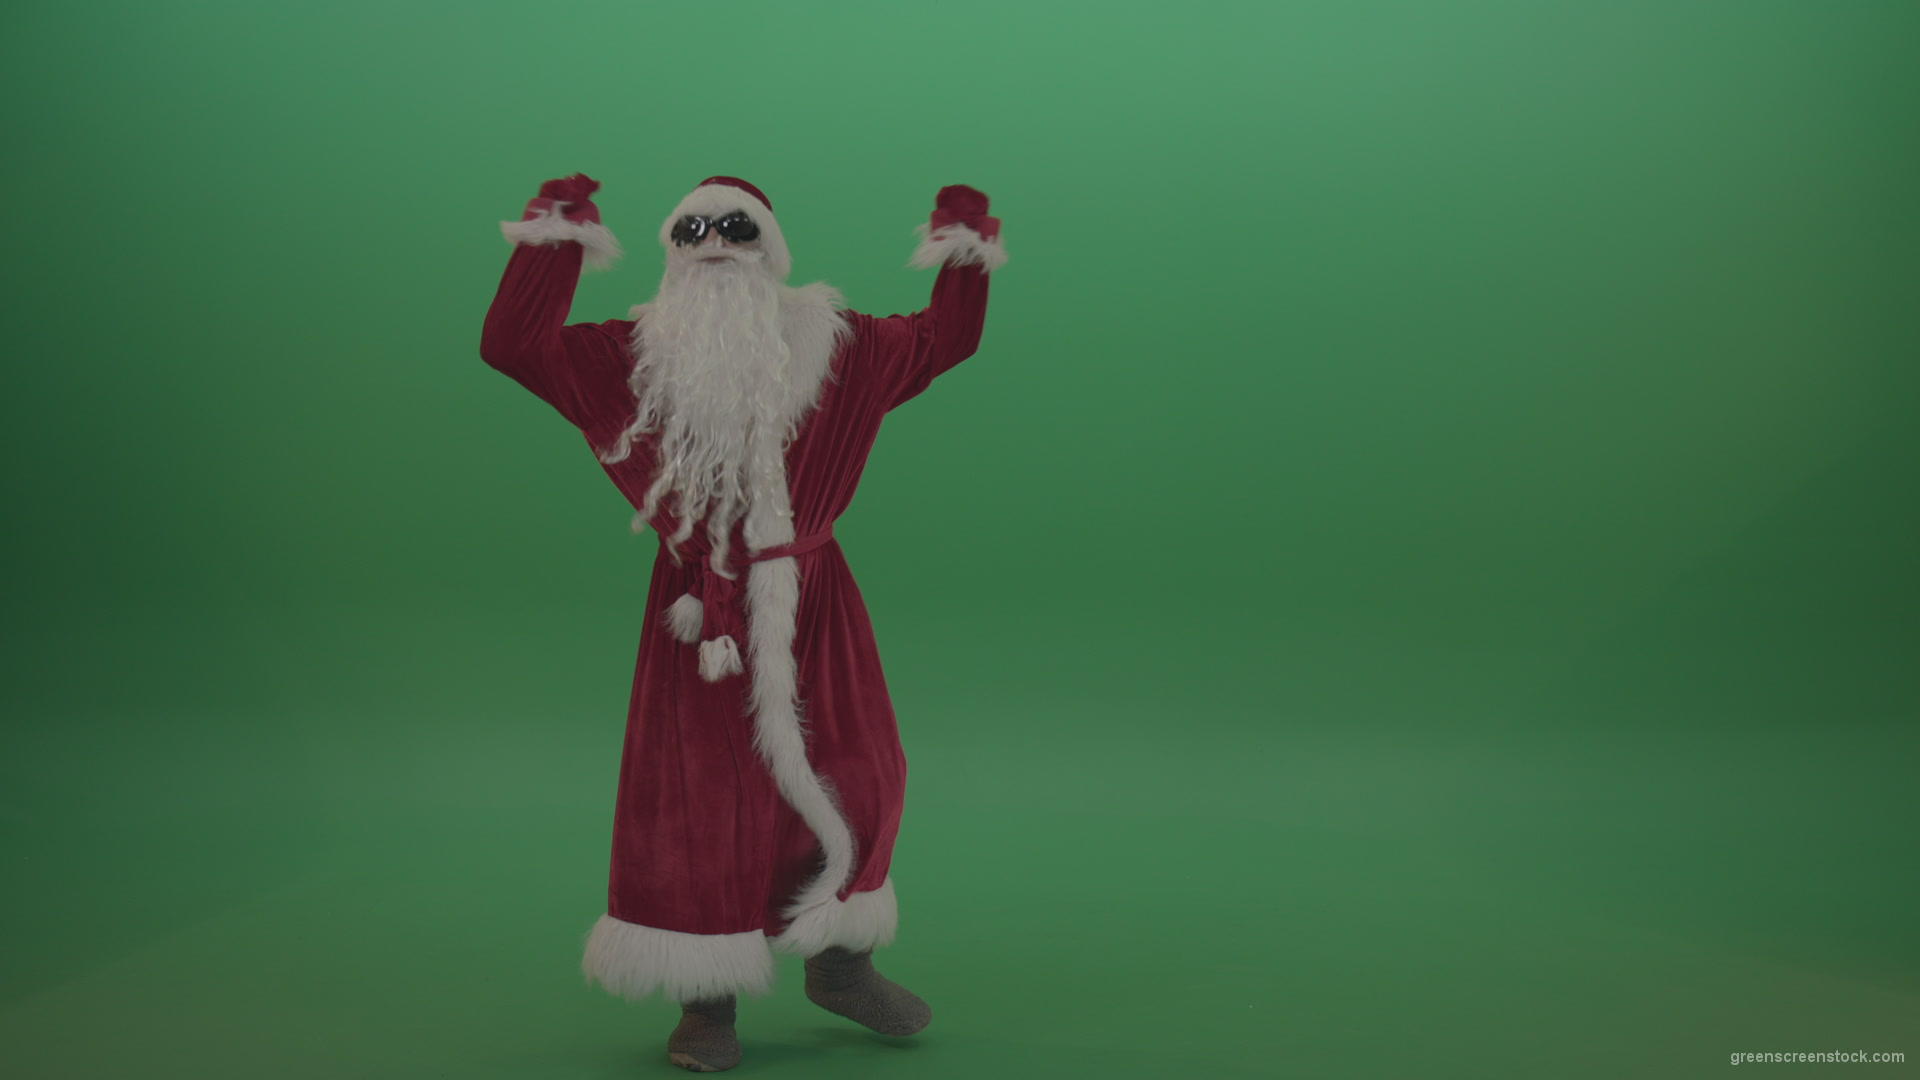 Santa-in-black-glasses-shows-his-dance-skills-over-chromakey-background_008 Green Screen Stock